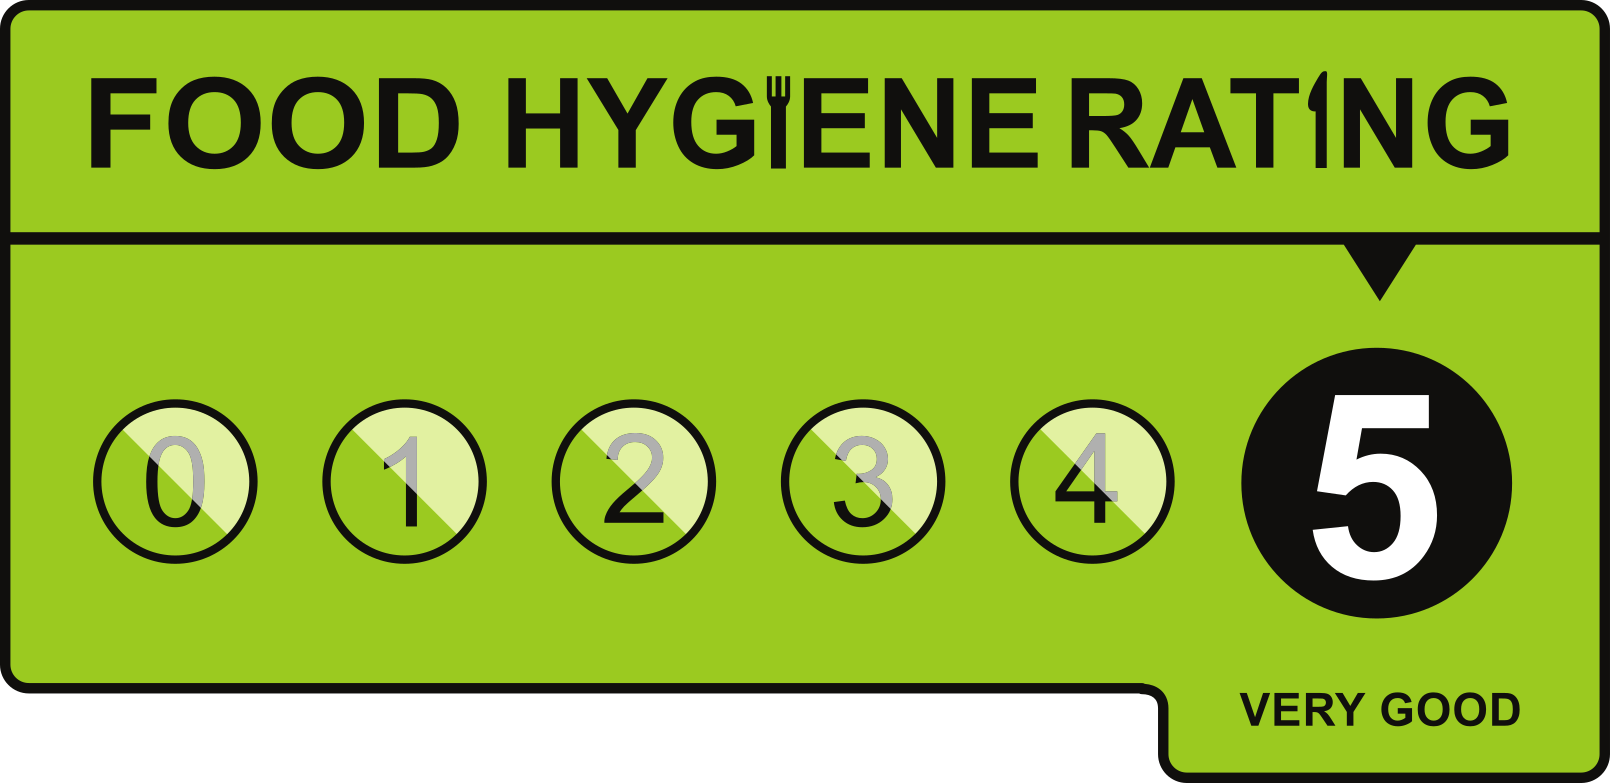 5 Star Food Hygiene Rating.